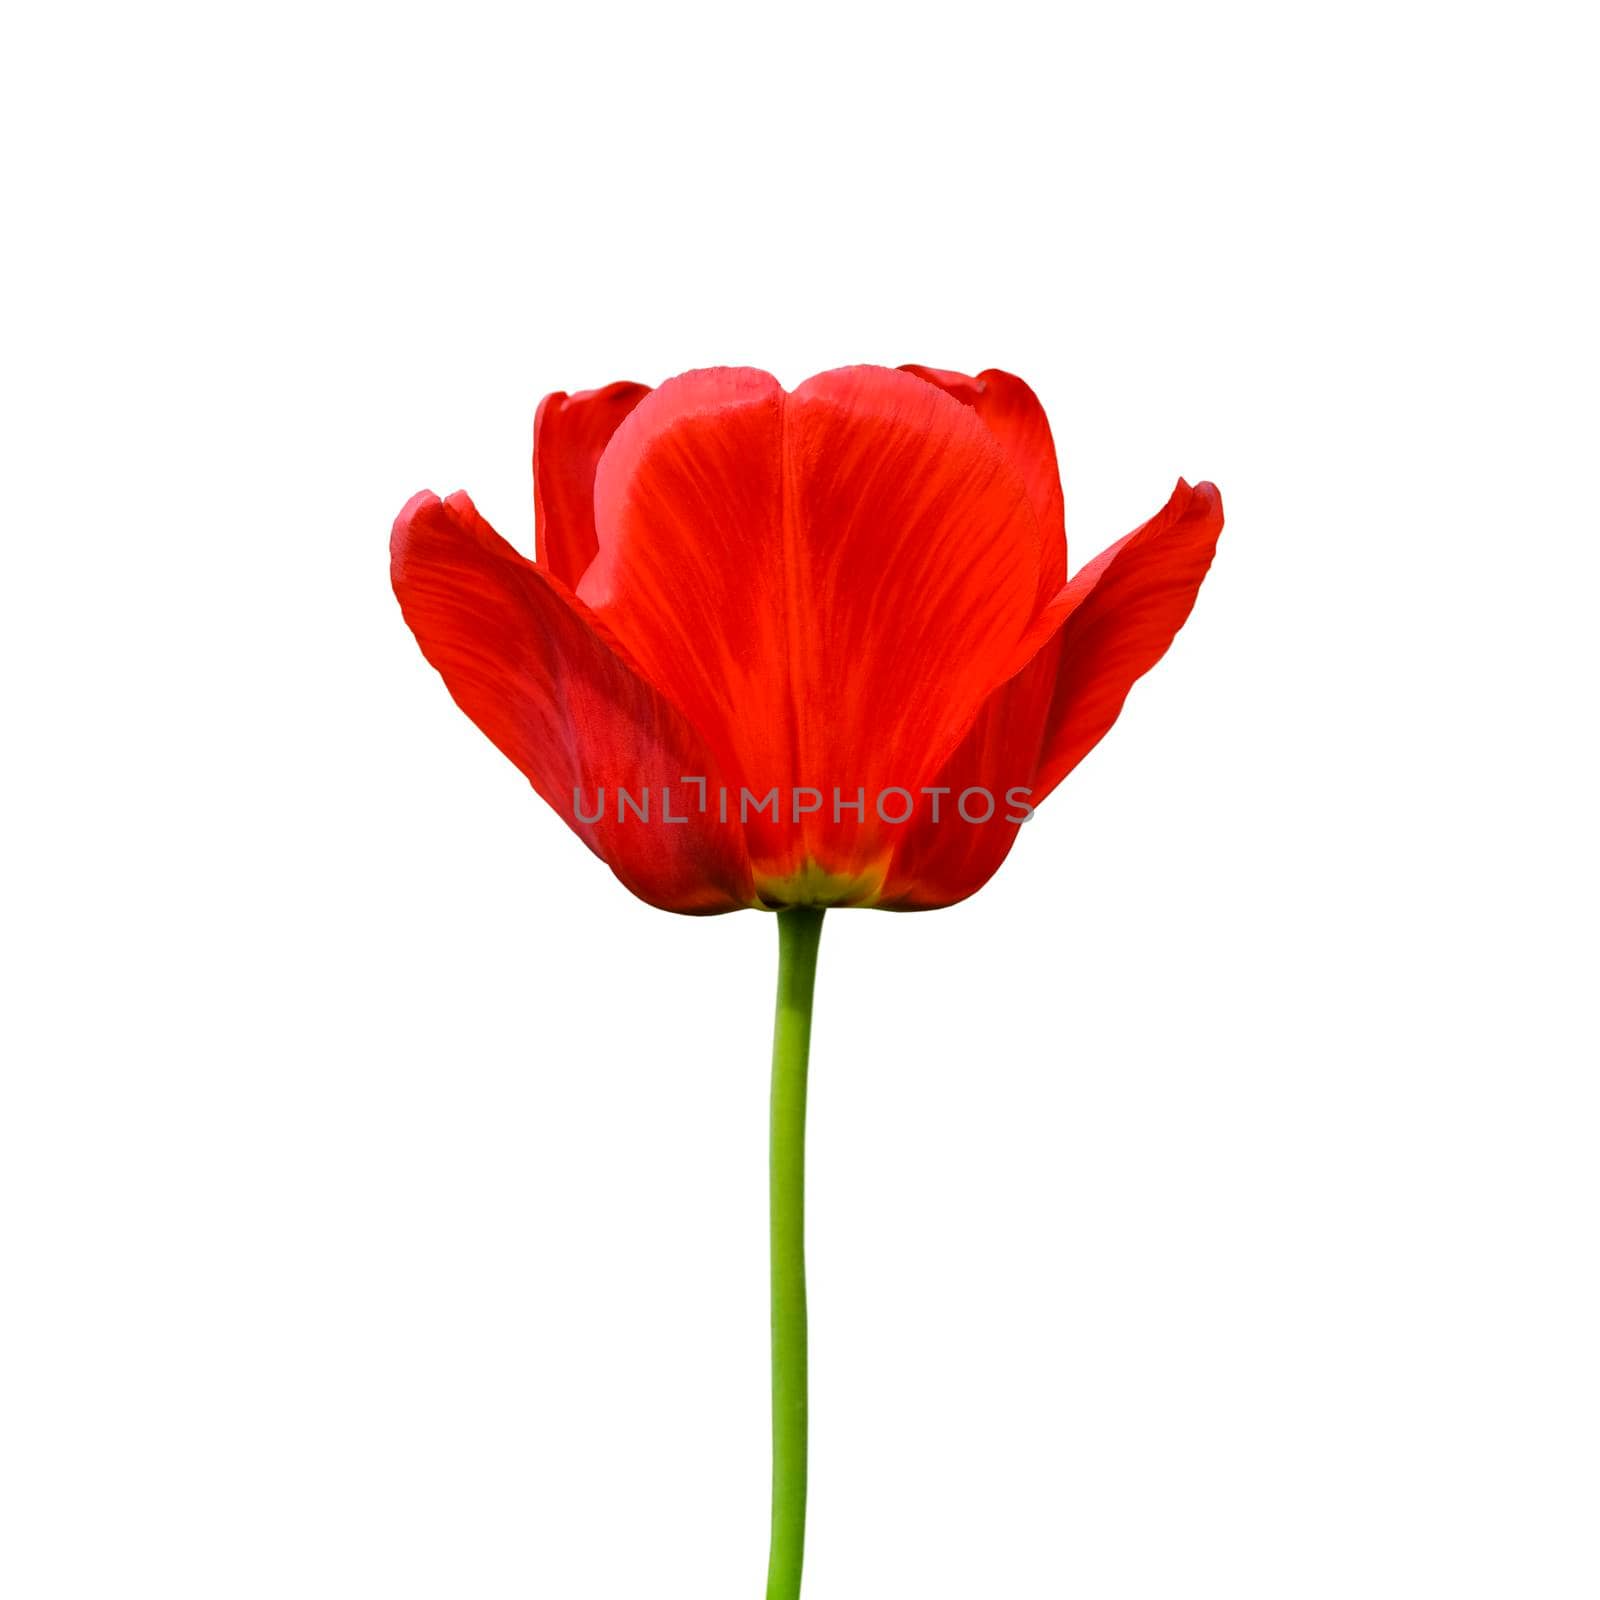 Red tulip flower isolated on white background. Tulip flower head isolated on white. Spring flowers by esvetleishaya